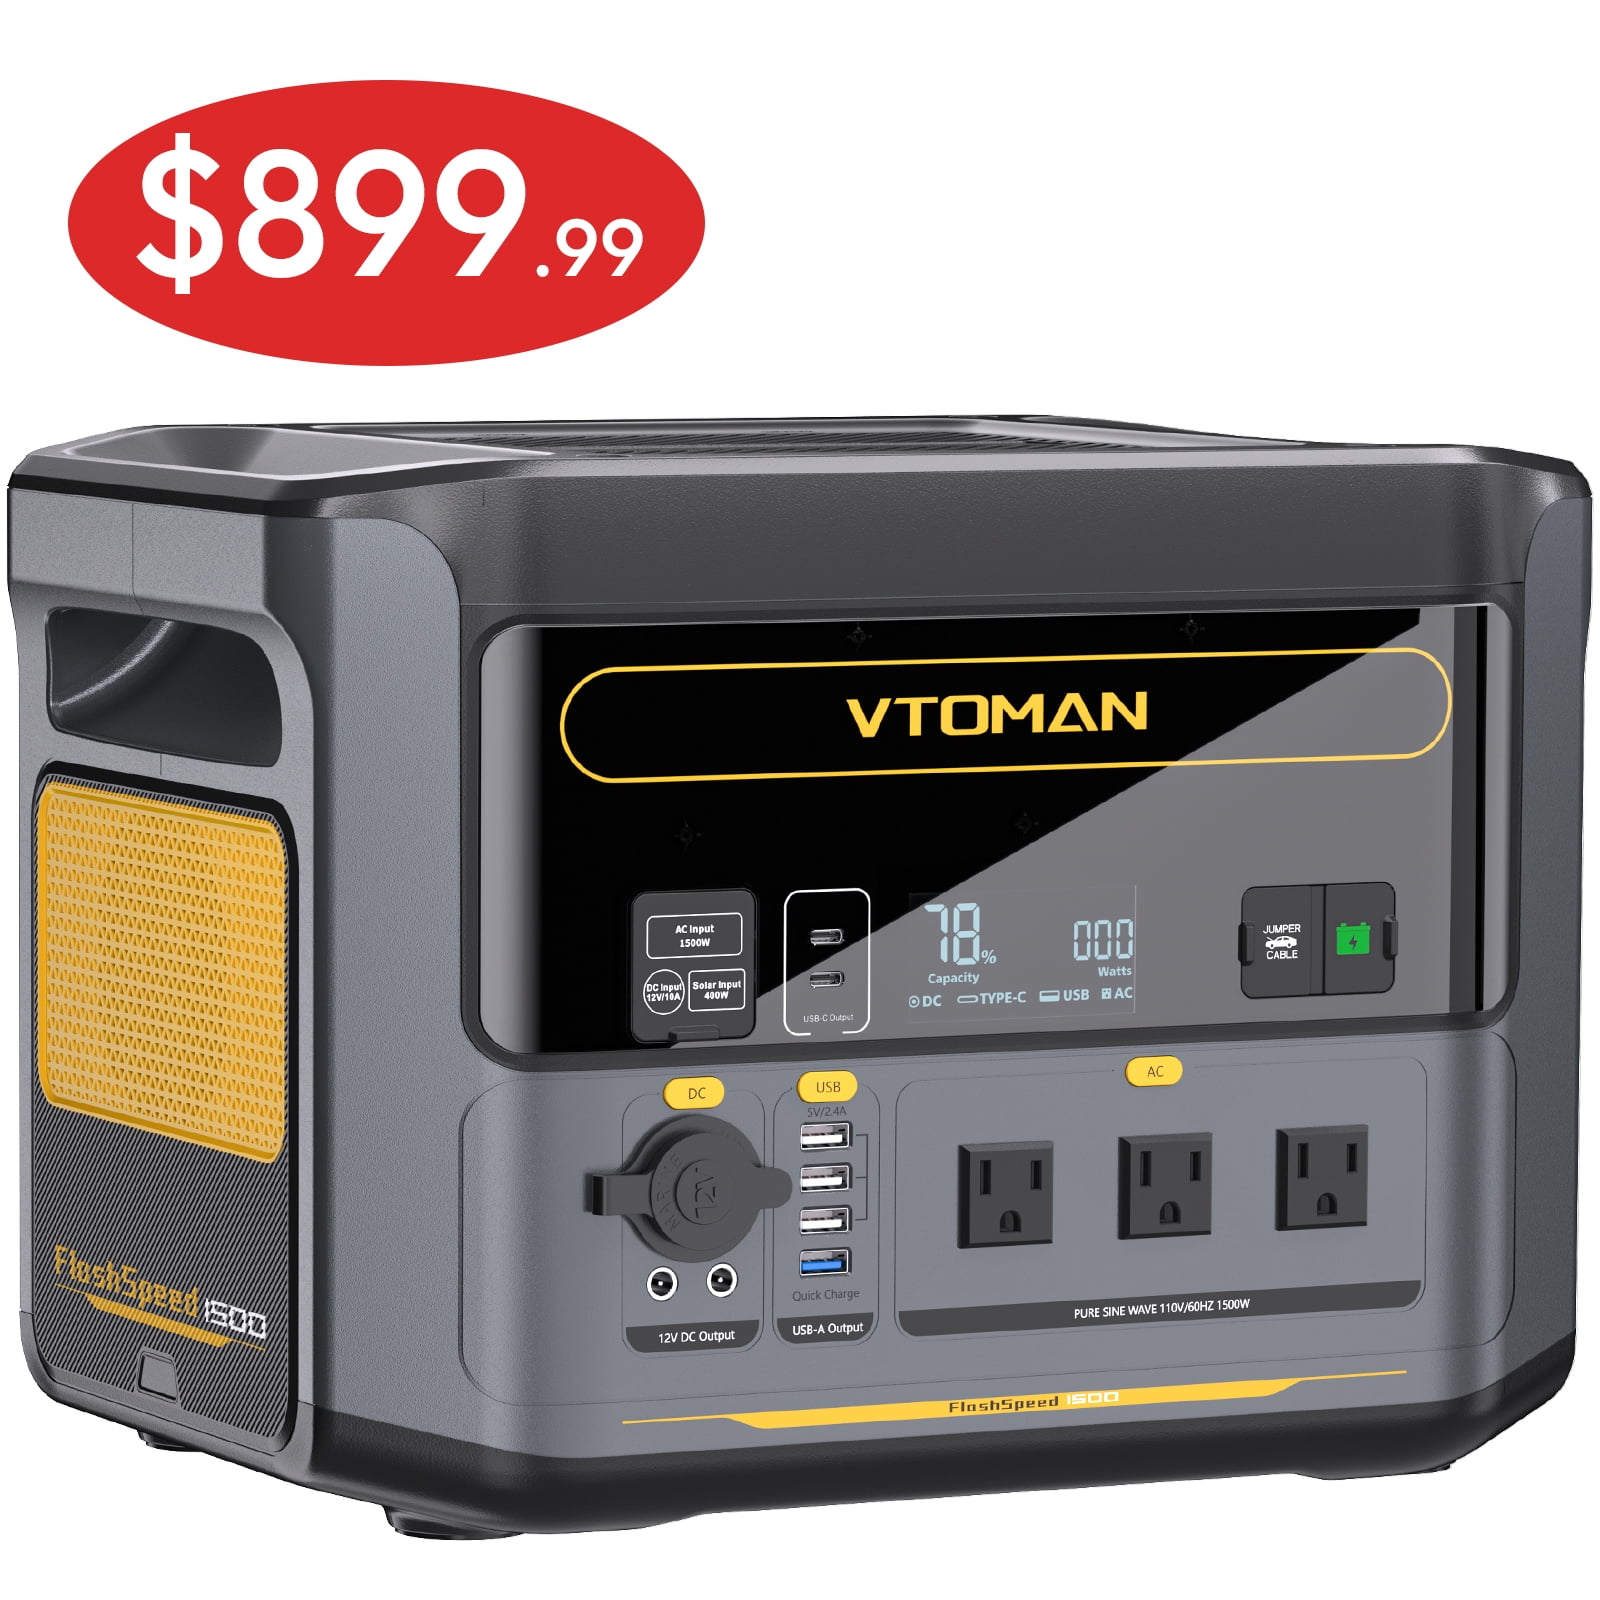 Review: VTOMAN FlashSpeed 1500 Portable Power Station